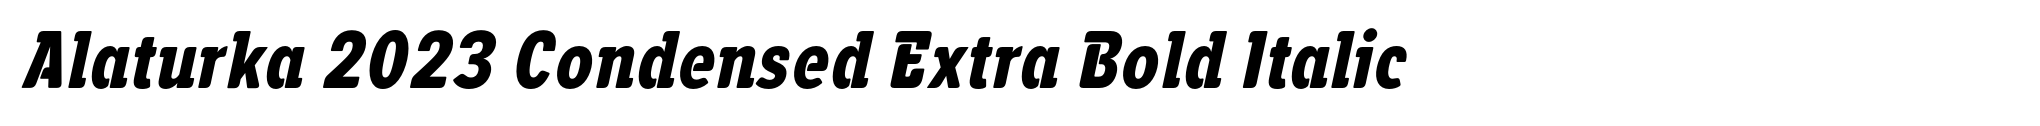 Alaturka 2023 Condensed Extra Bold Italic image